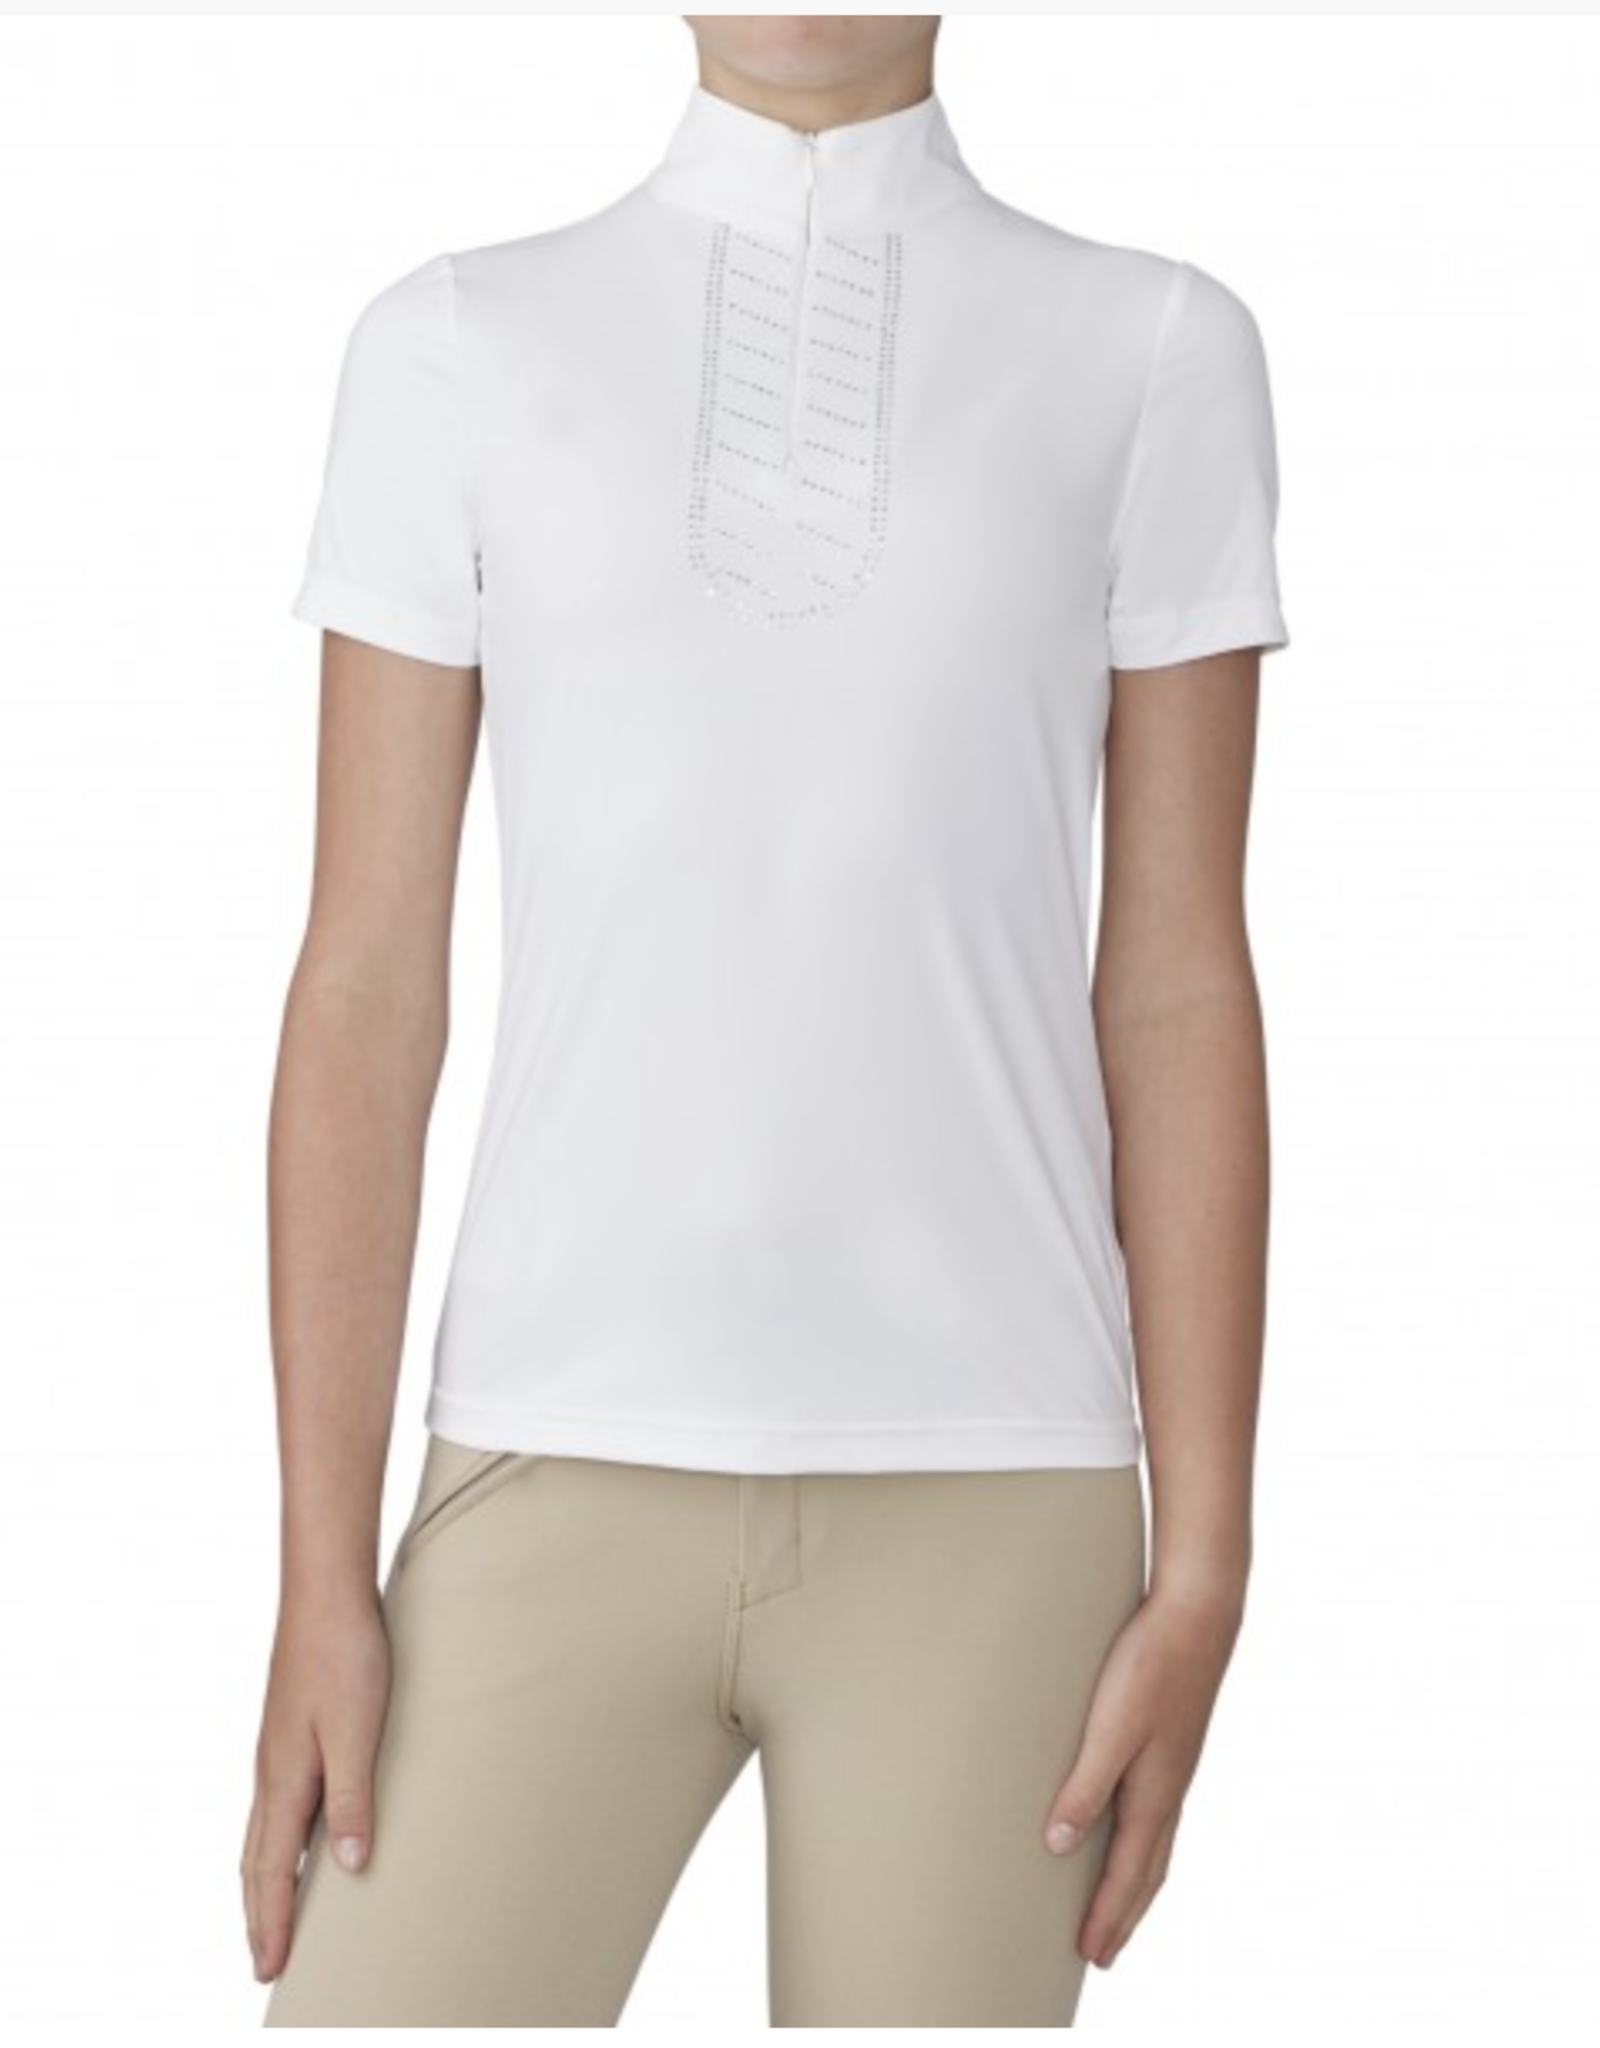 Ovation Kids' Glamour Short Sleeve Show Shirt